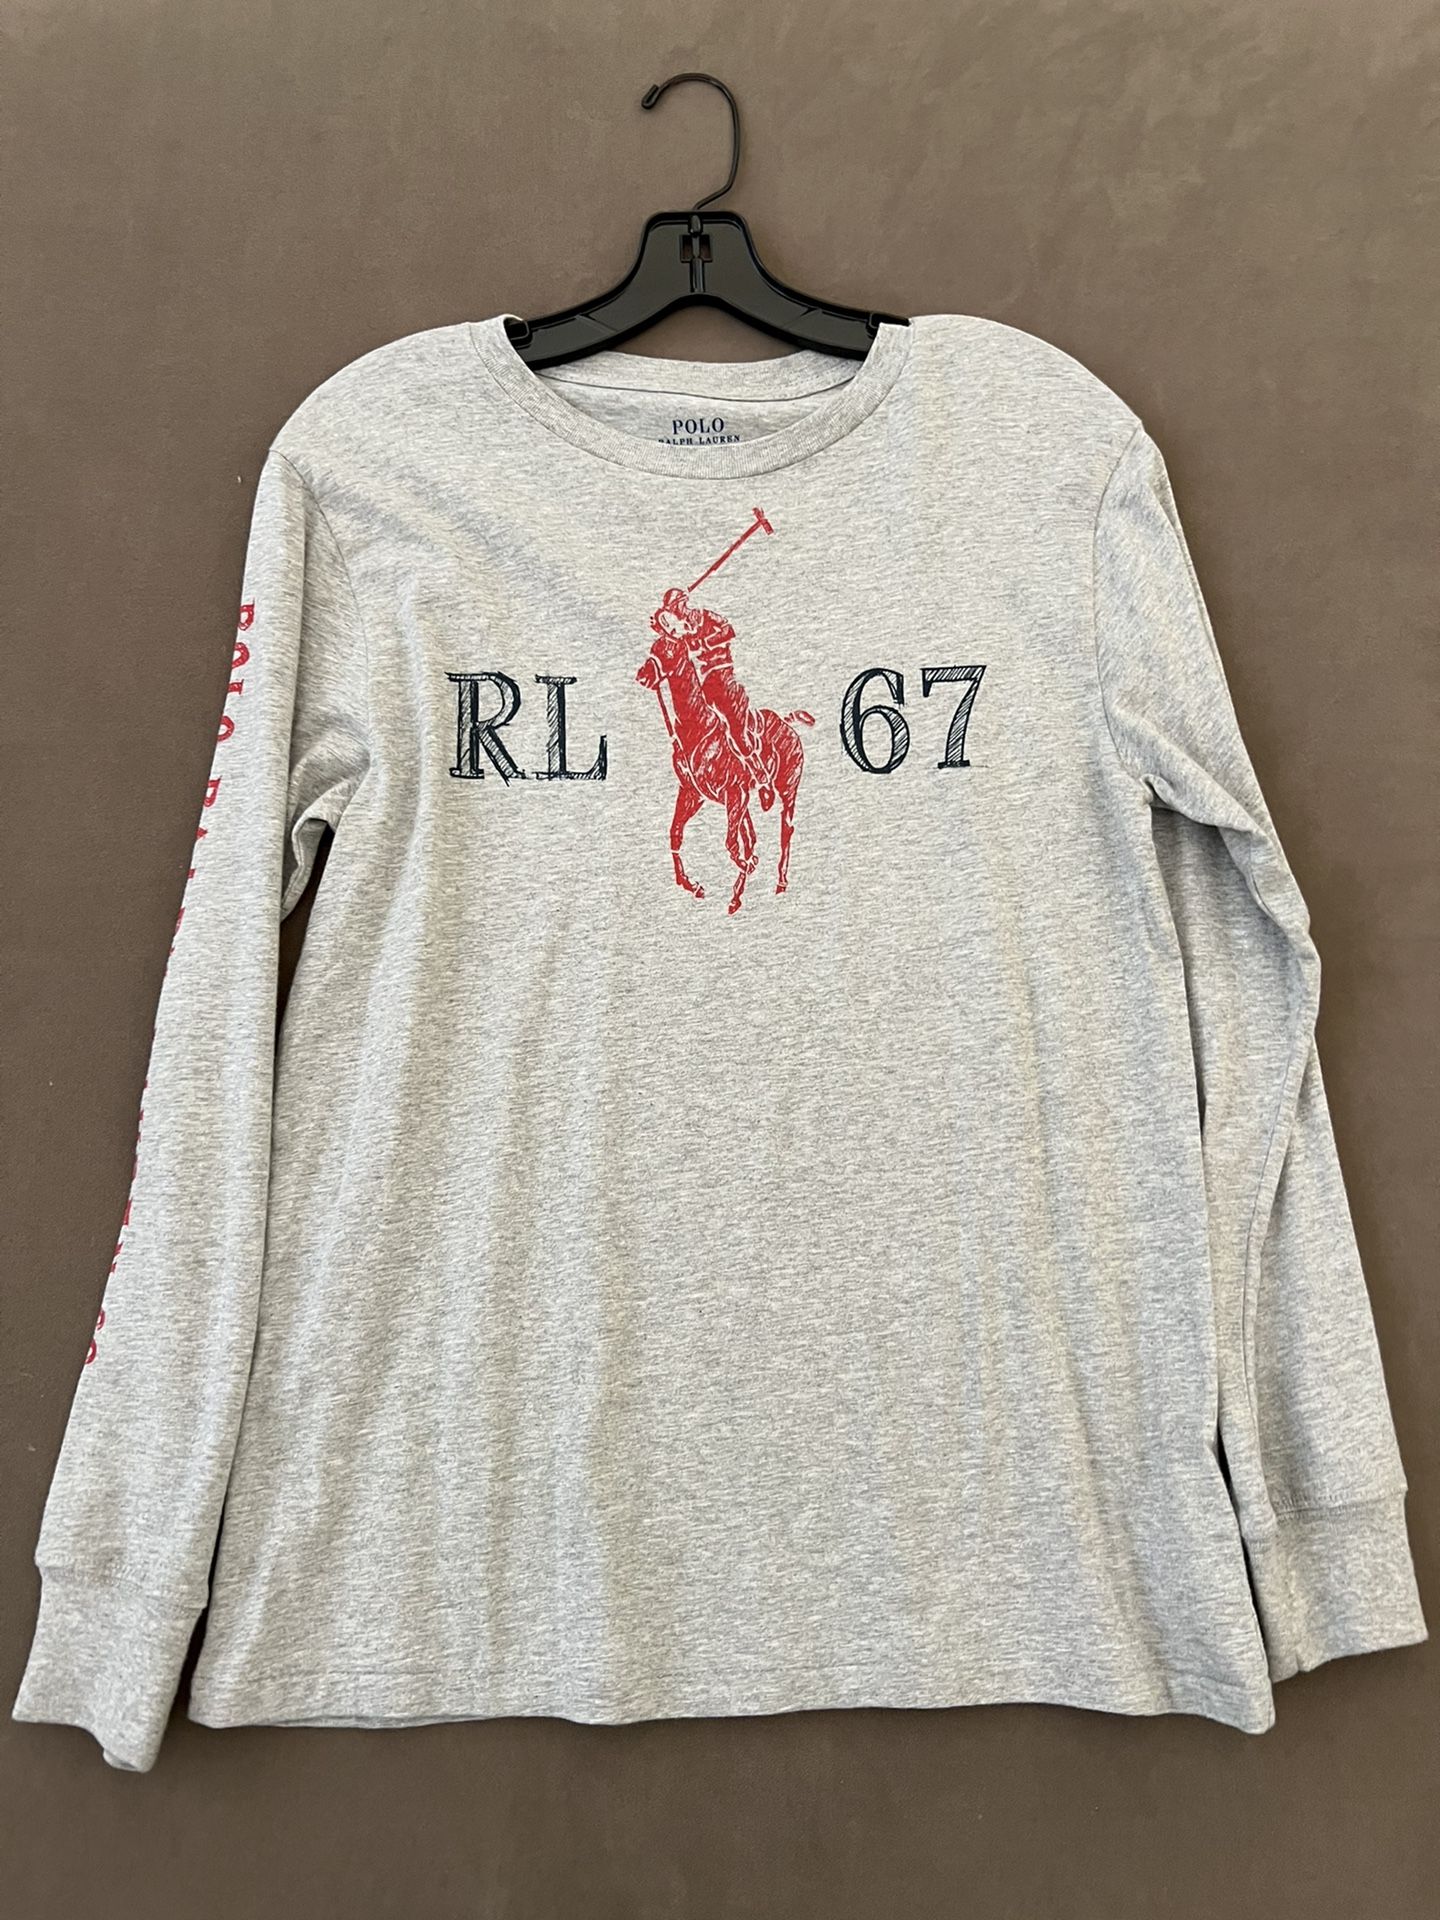 Boys Ralph Lauren Shirt Size Large 